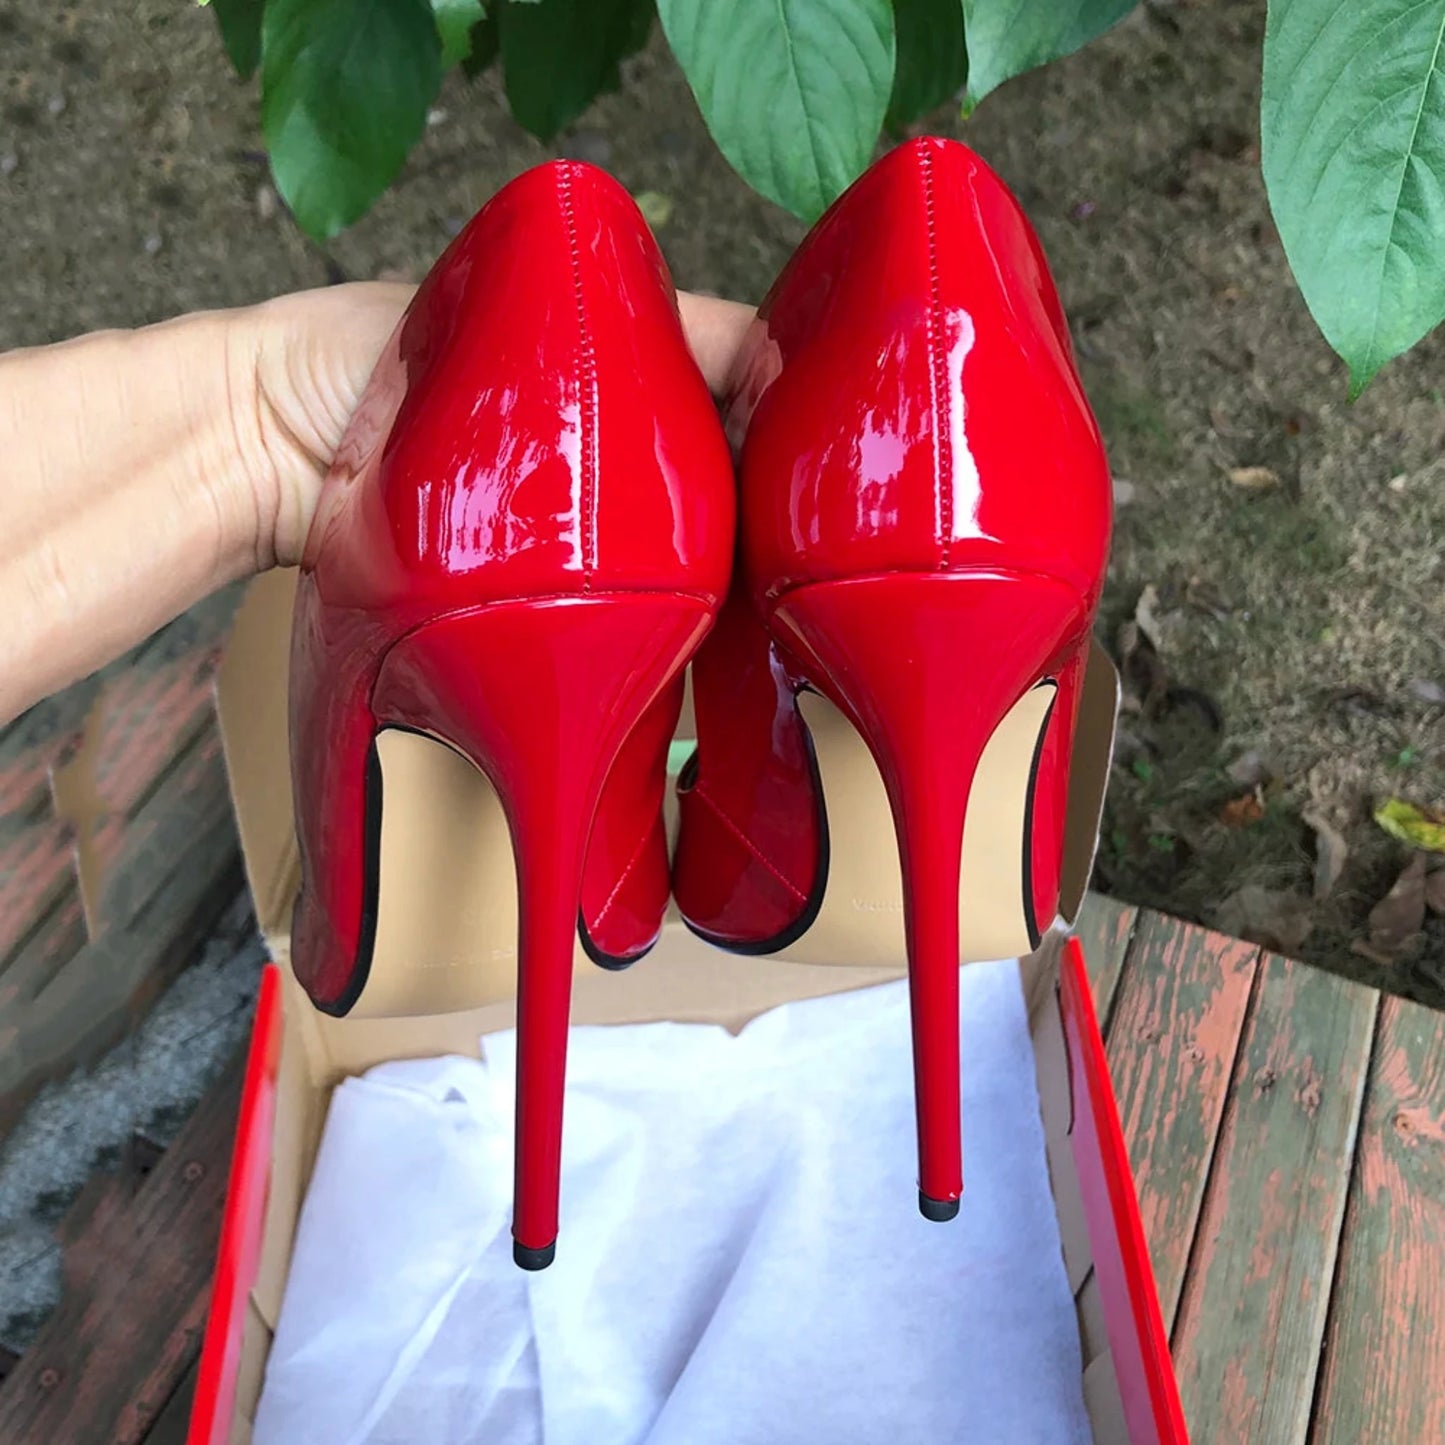 Zapatos de tacón de aguja rojos con punta extrema